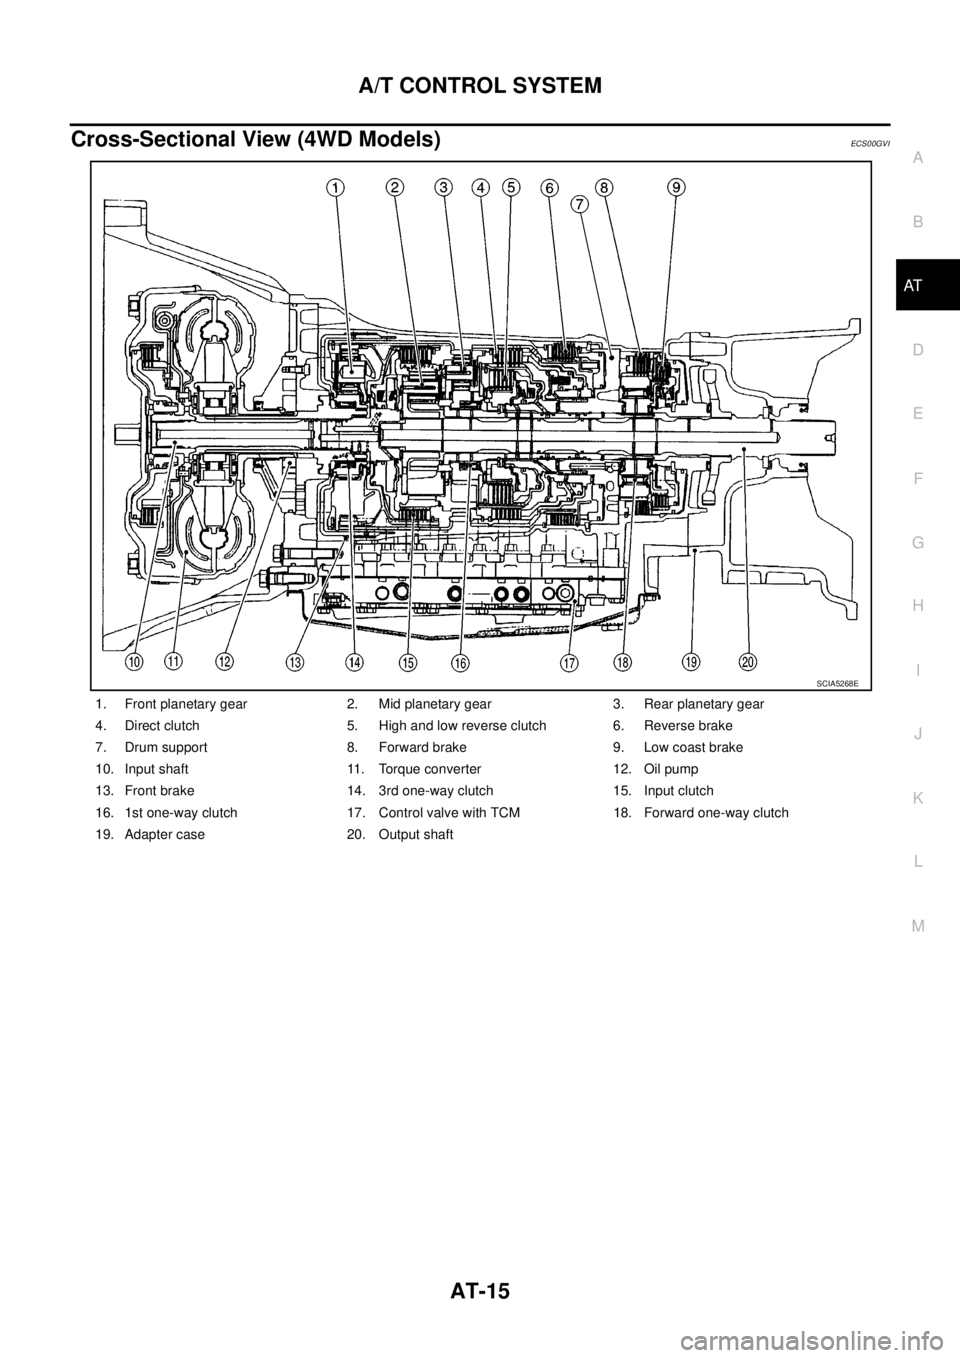 NISSAN NAVARA 2005  Repair Workshop Manual A/T CONTROL SYSTEM
AT-15
D
E
F
G
H
I
J
K
L
MA
B
AT
Cross-Sectional View (4WD Models)ECS00GVI
1. Front planetary gear 2. Mid planetary gear 3. Rear planetary gear
4. Direct clutch 5. High and low rever